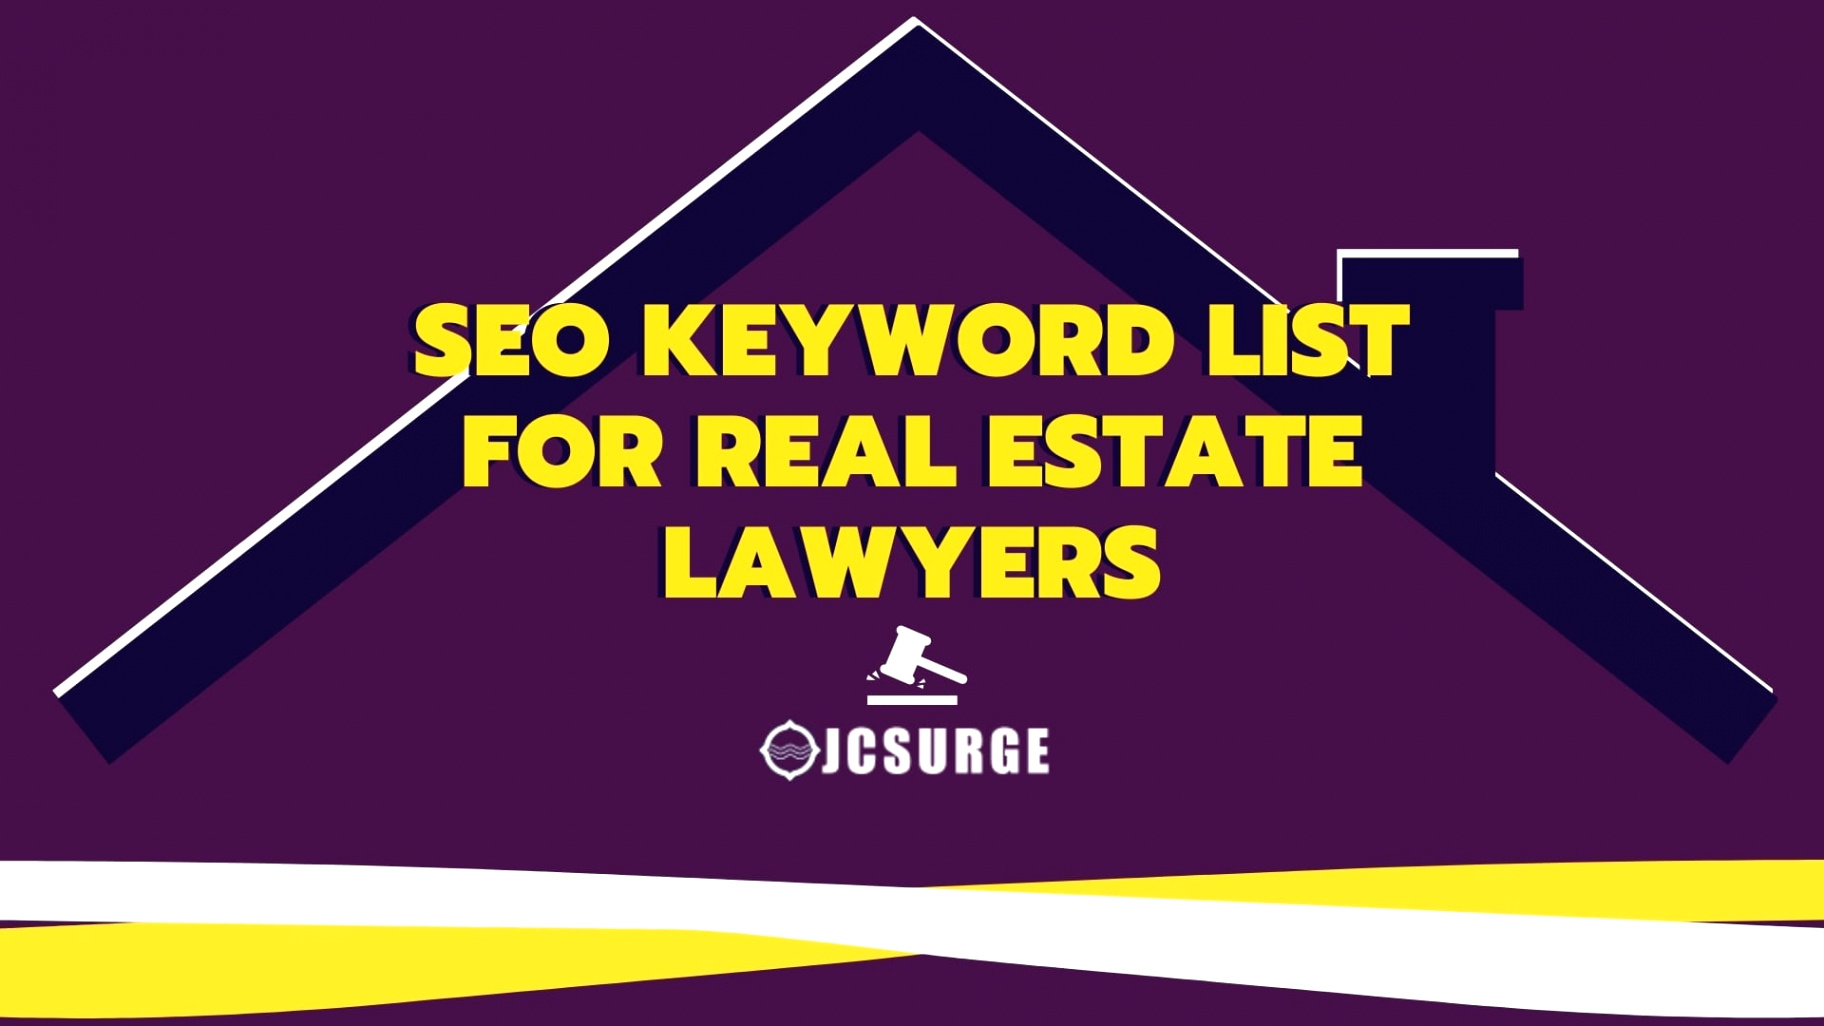 real estate lawyers keywords list